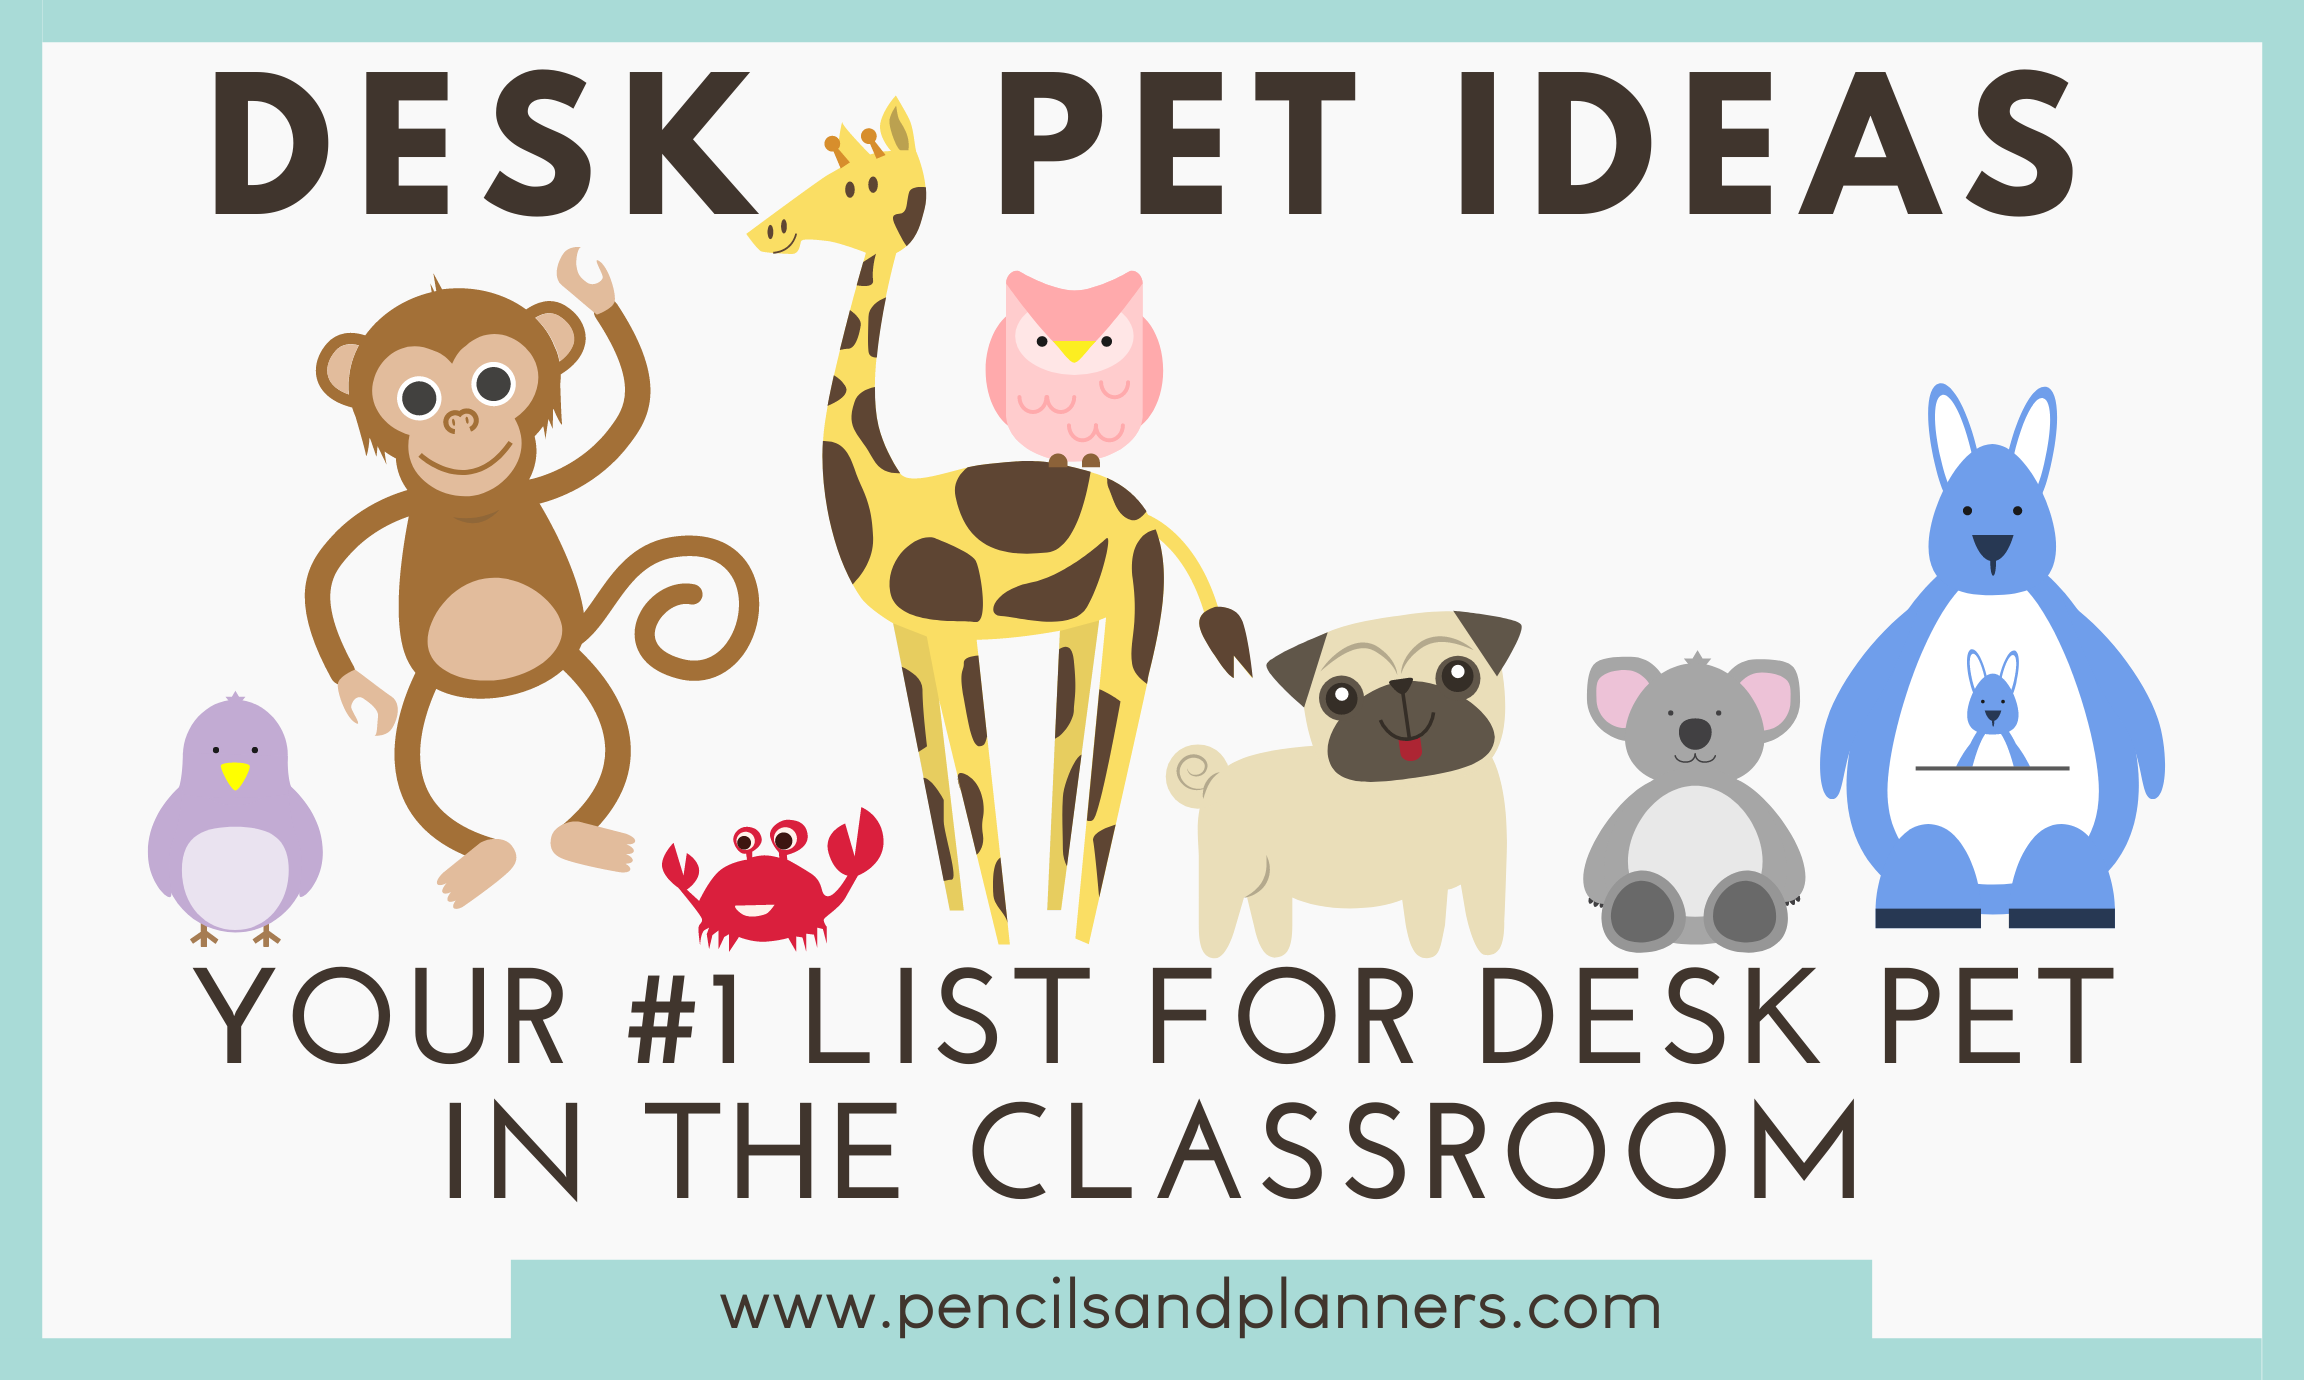 Desk Pet Ideas: Your #1 List for Desk Pets in the Classroom